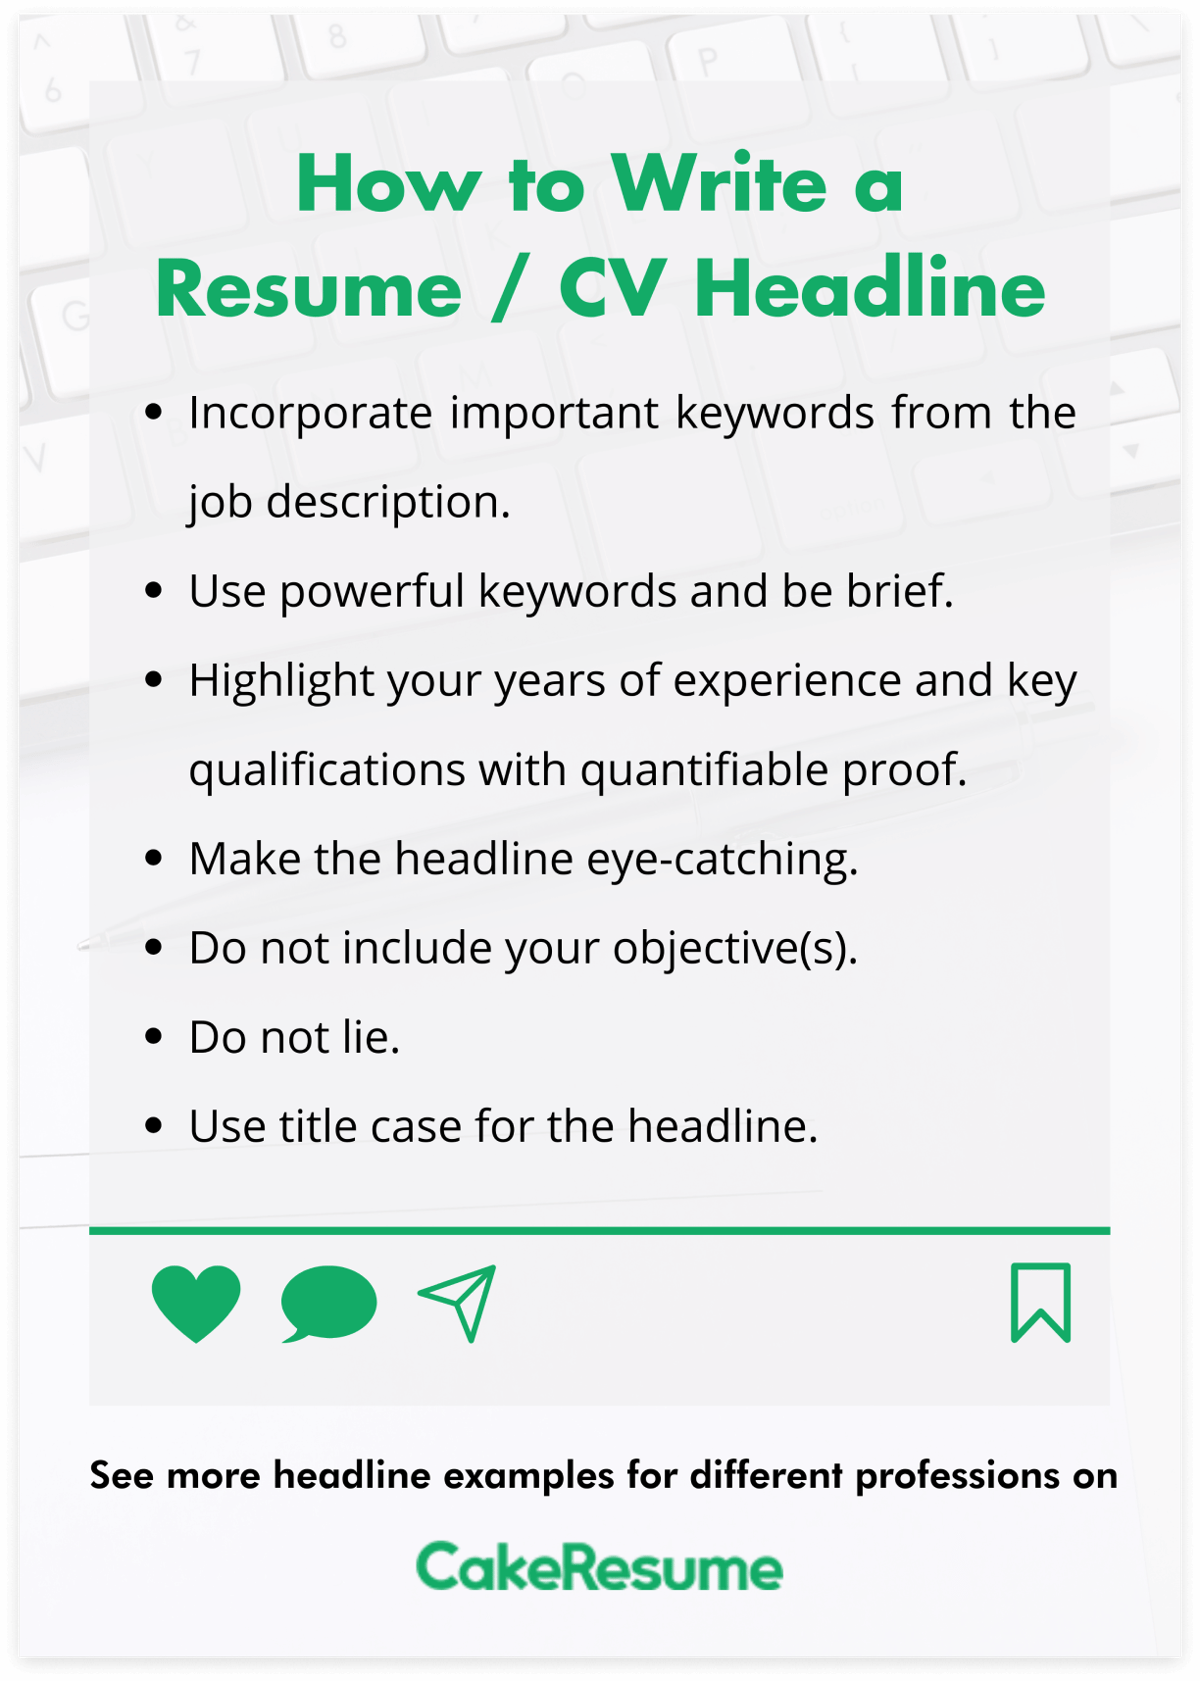 resume-headline